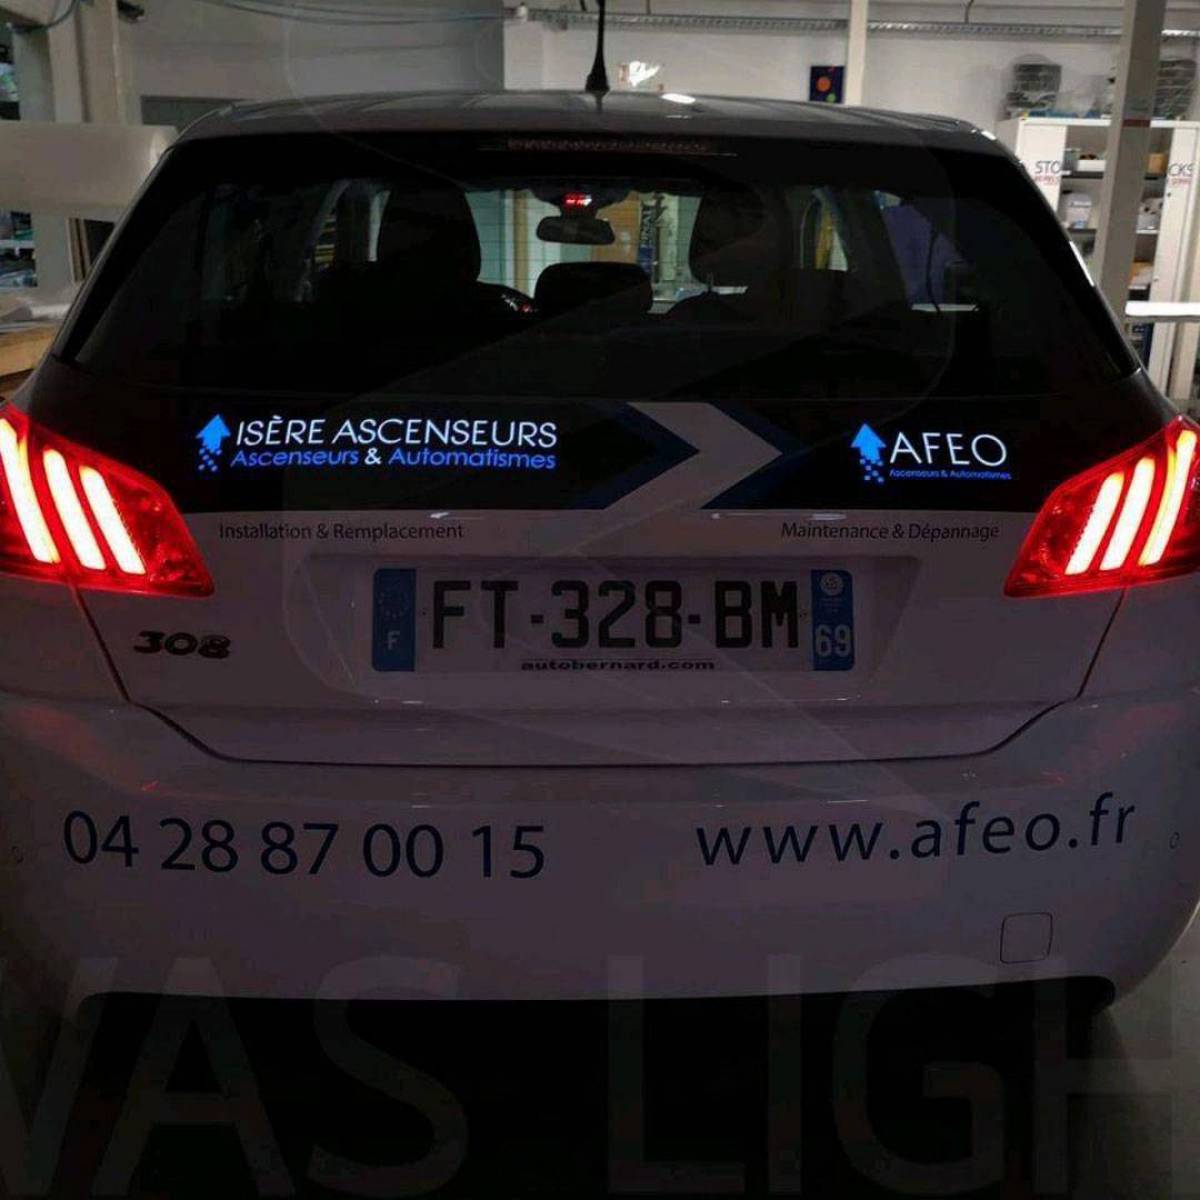 Covering électroluminescent voiture AFEO et ISERE ASCENSEURS Grenoble